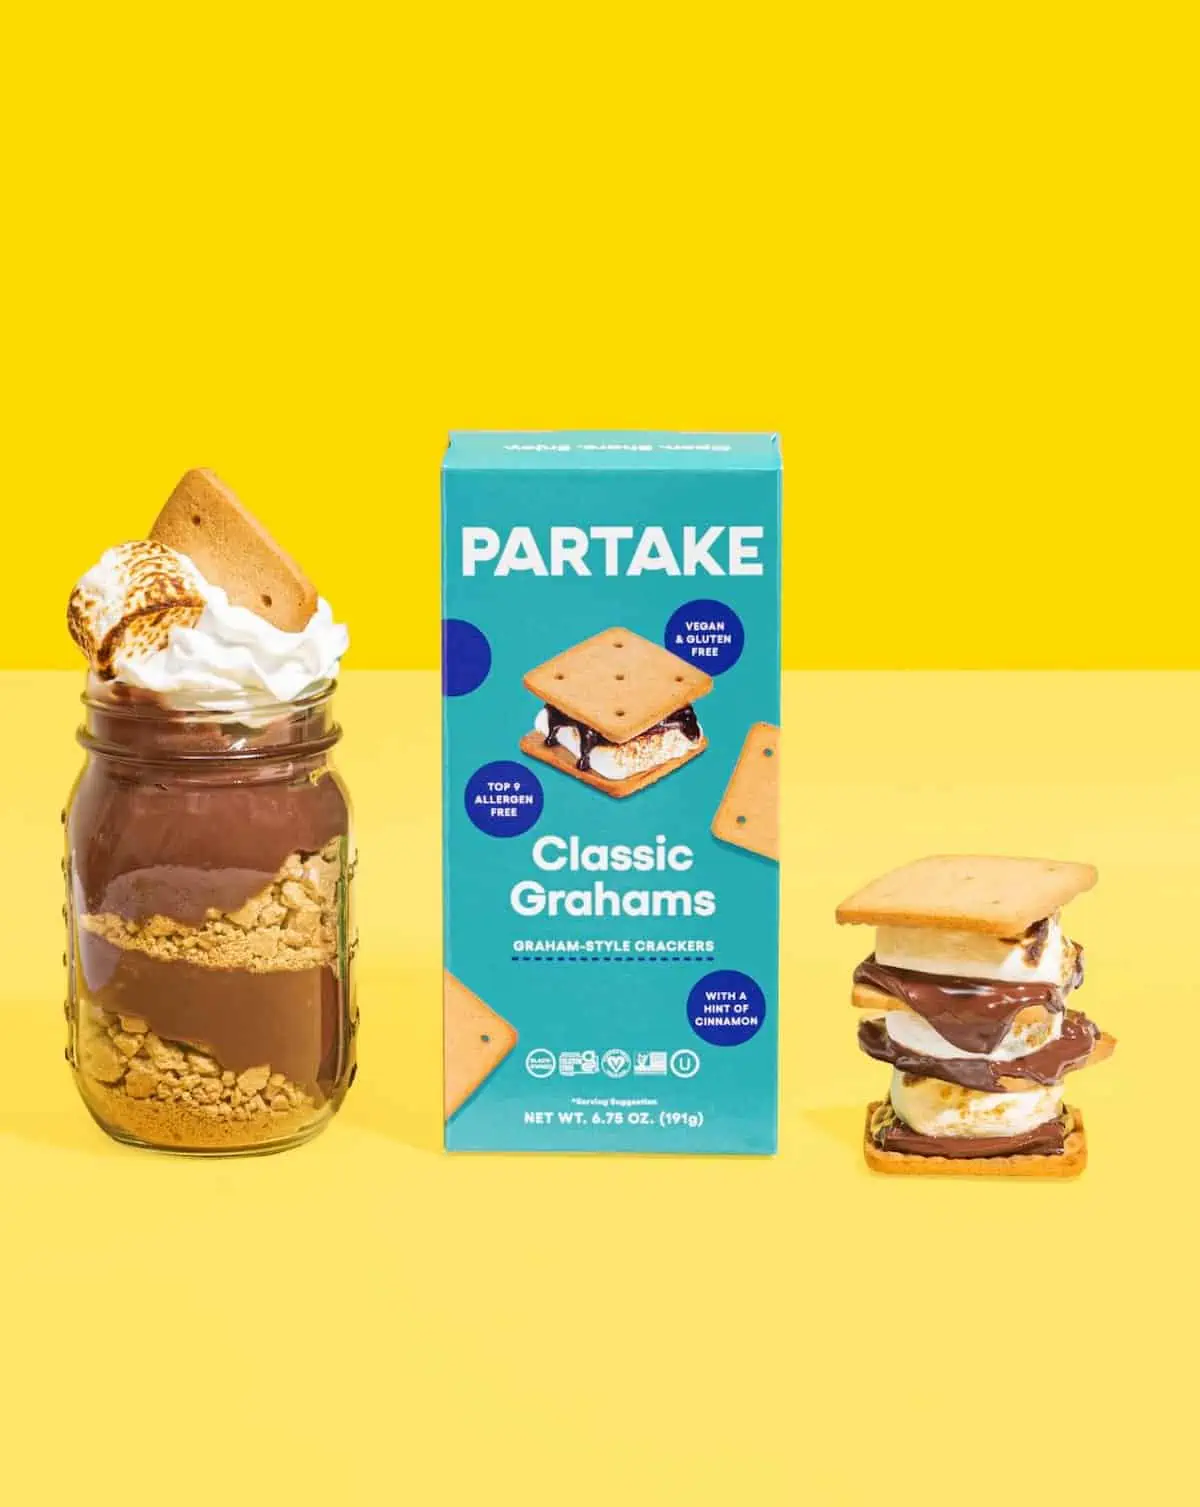 A package of Partake brand vegan graham crackers.